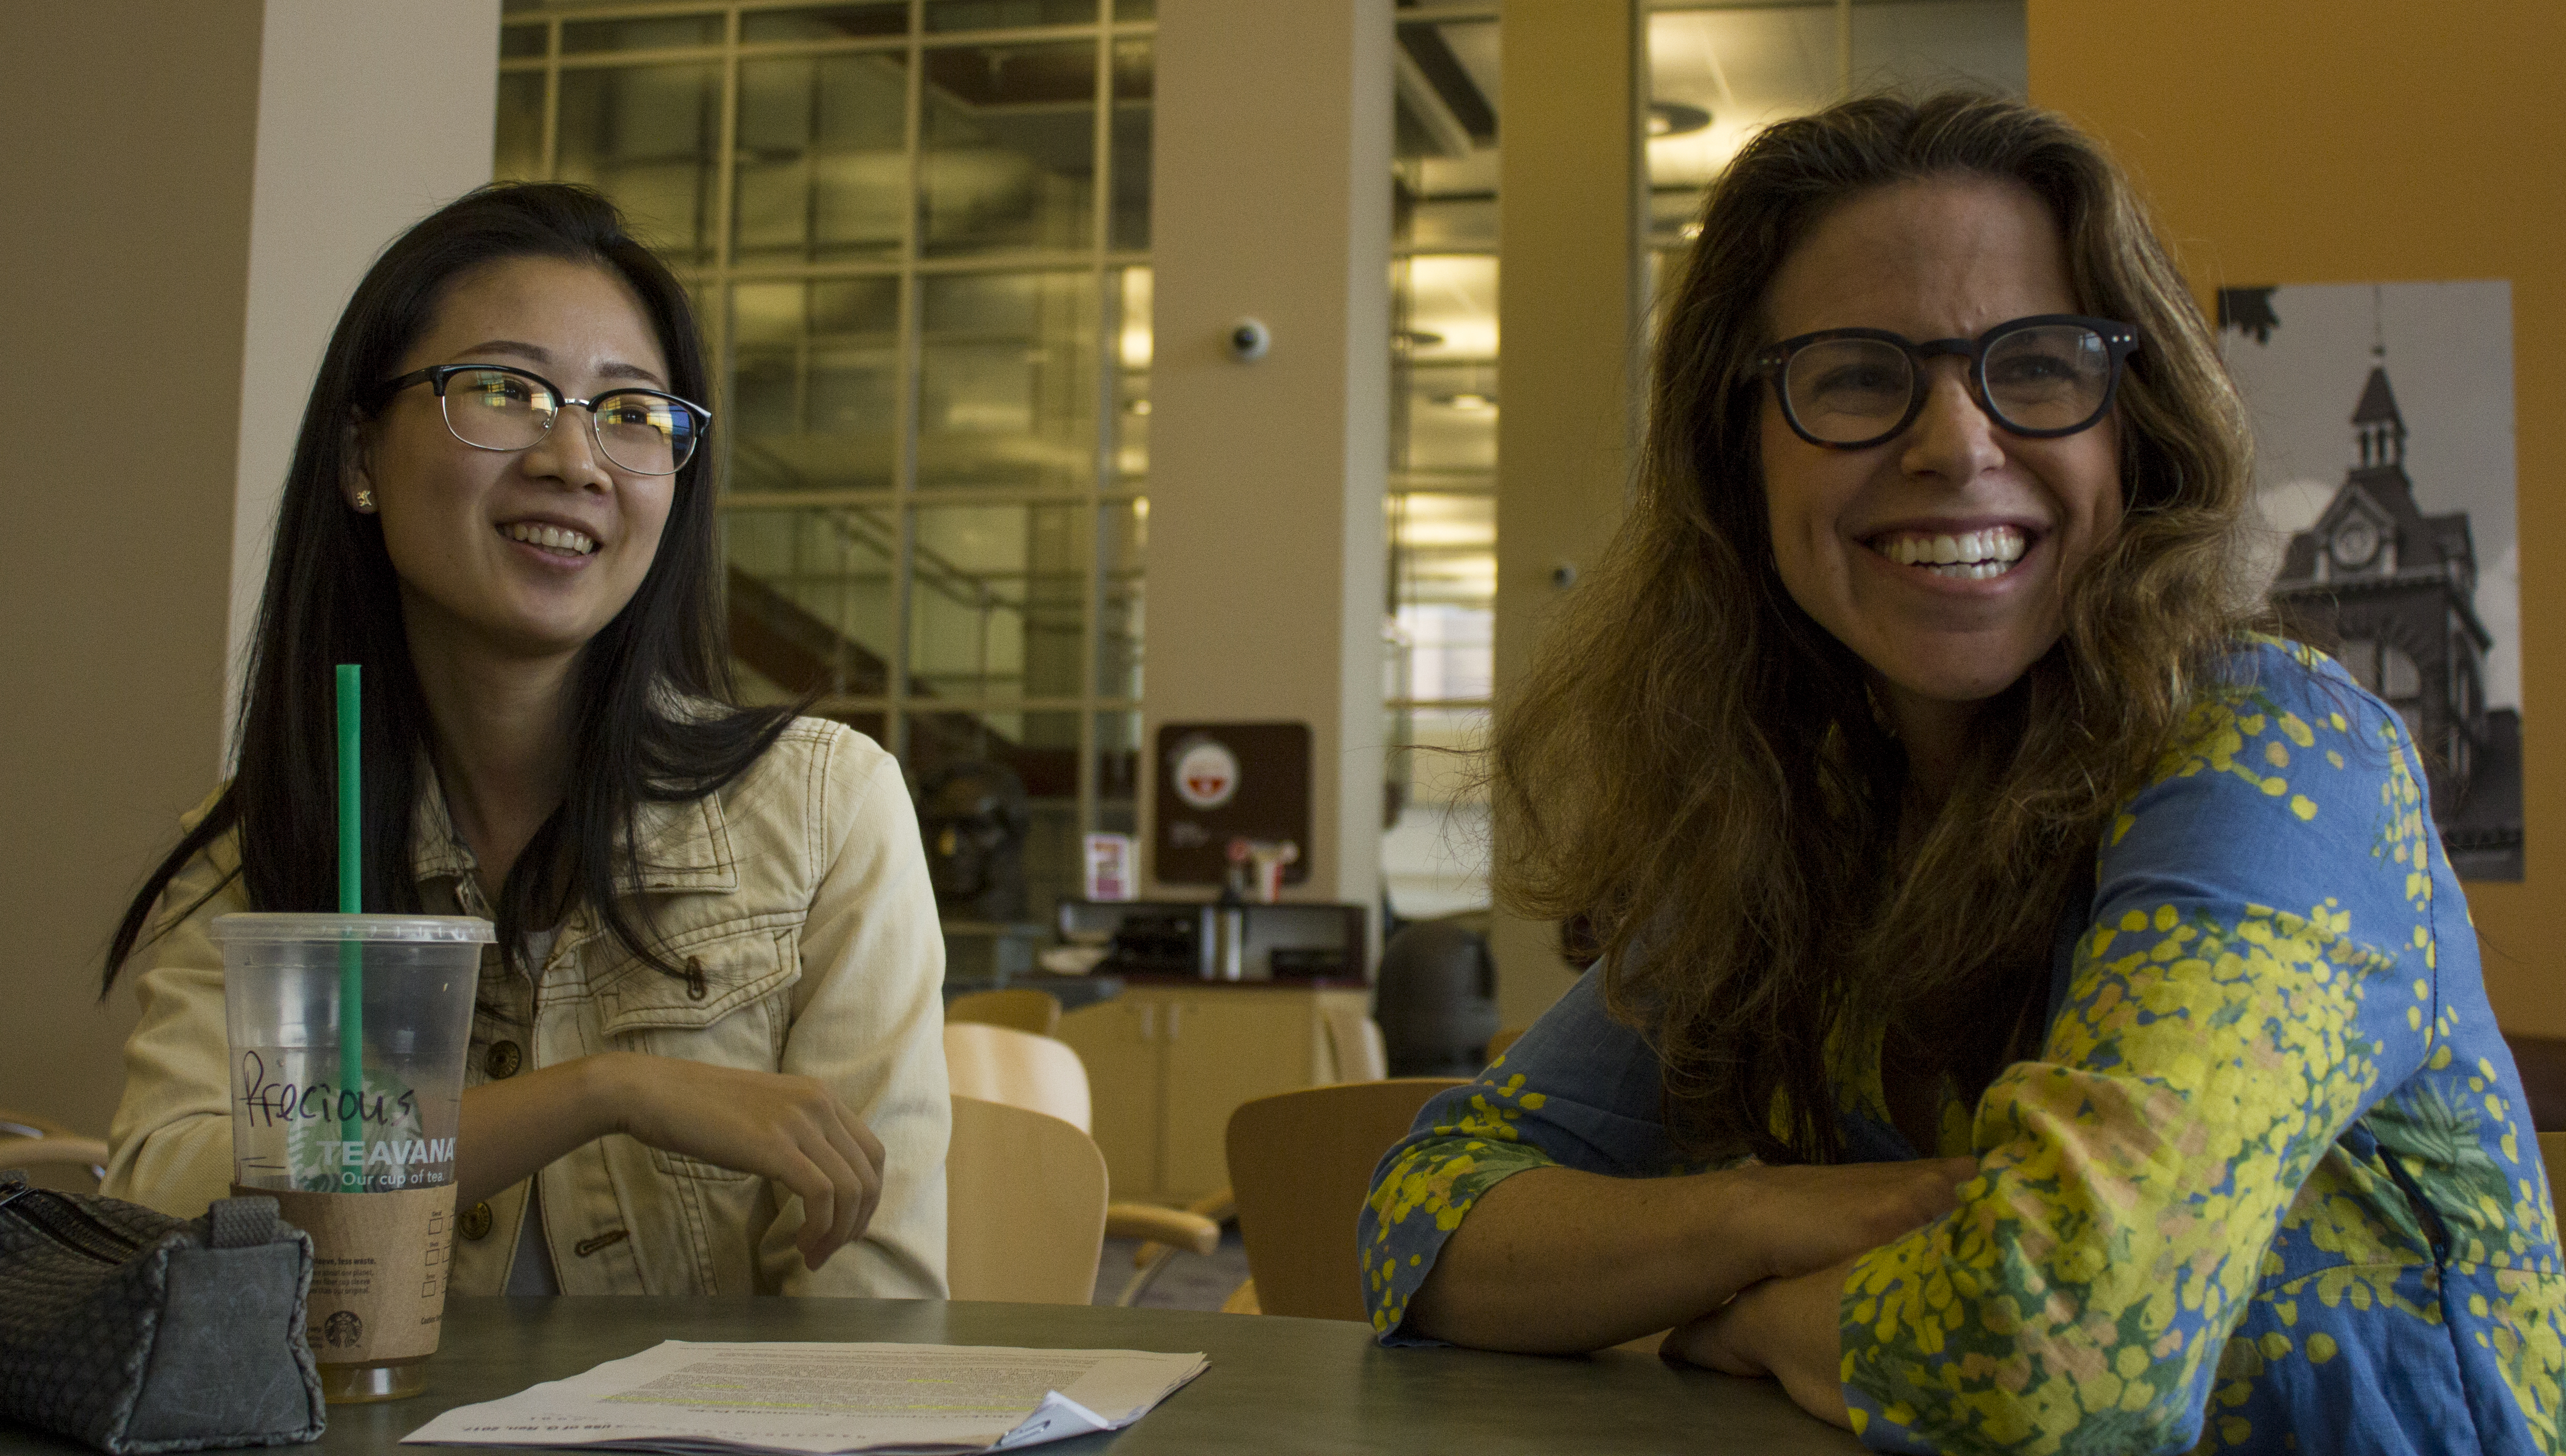 Natasha Zaretsky with student at Morris Library at Southern Illinois University Carbondale.